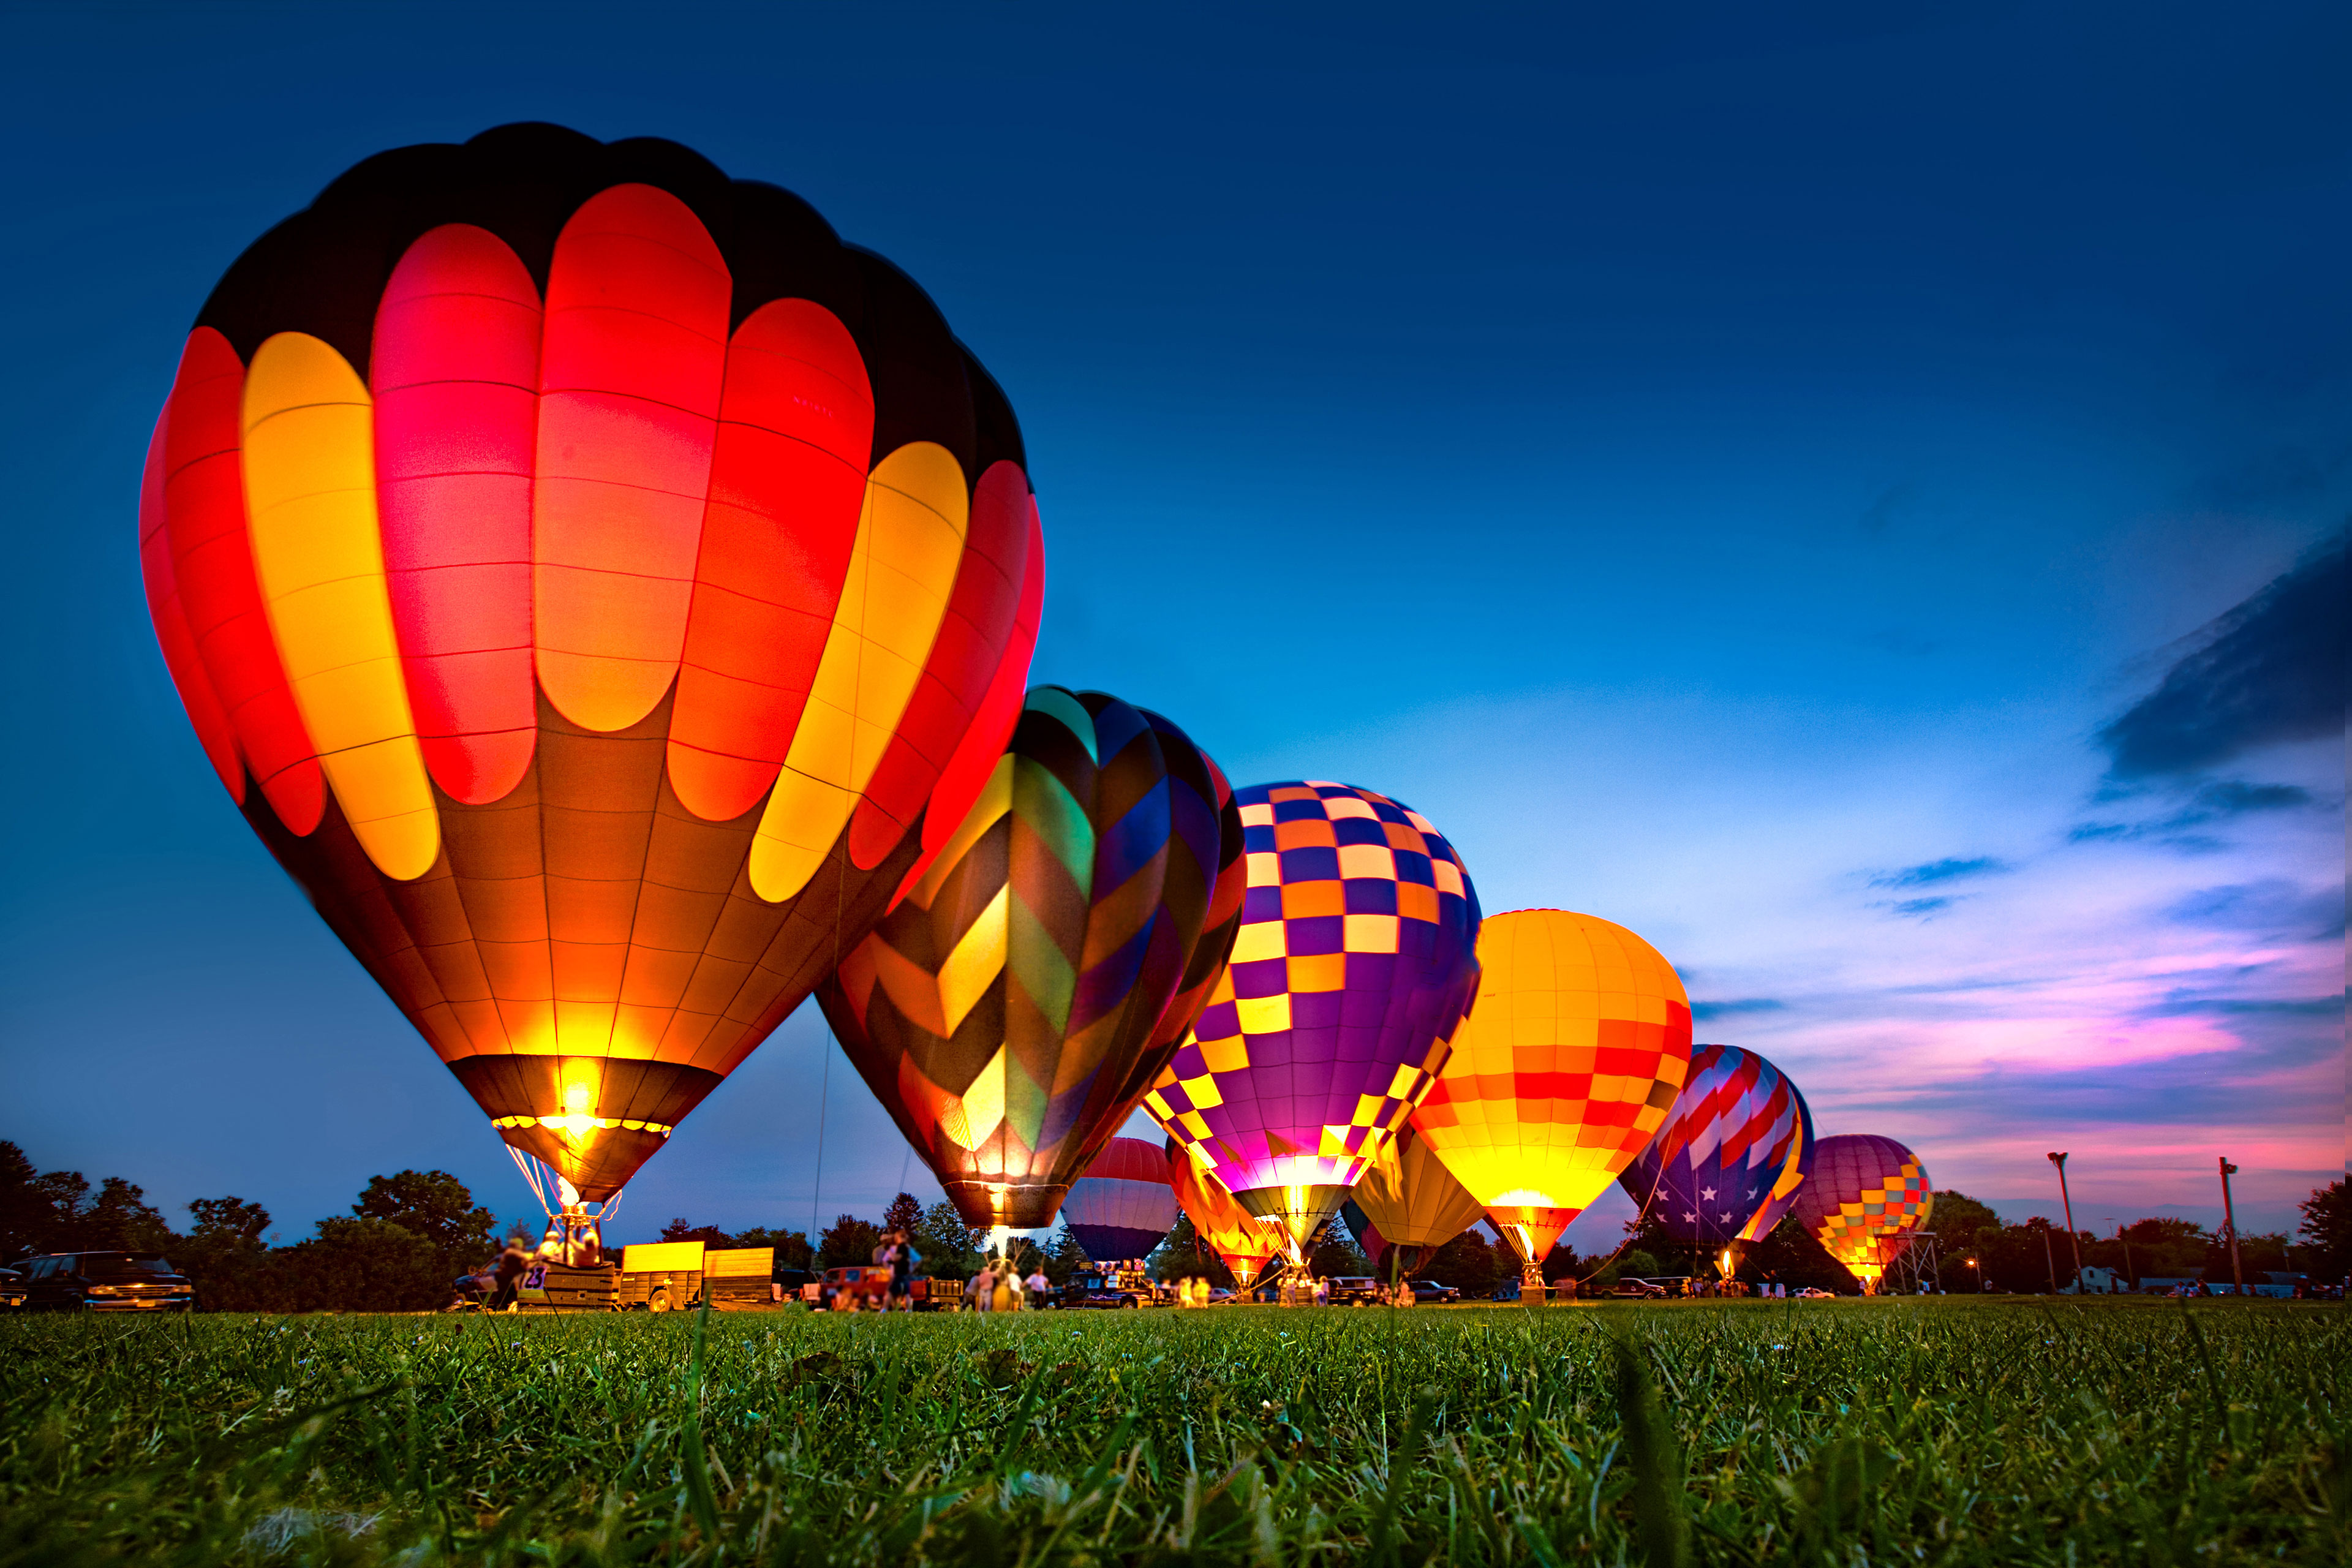 https://assets.ey.com/content/dam/ey-sites/ey-com/en_ae/topics/tmt/ey-hot-air-balloon-festival-night-glow.jpg